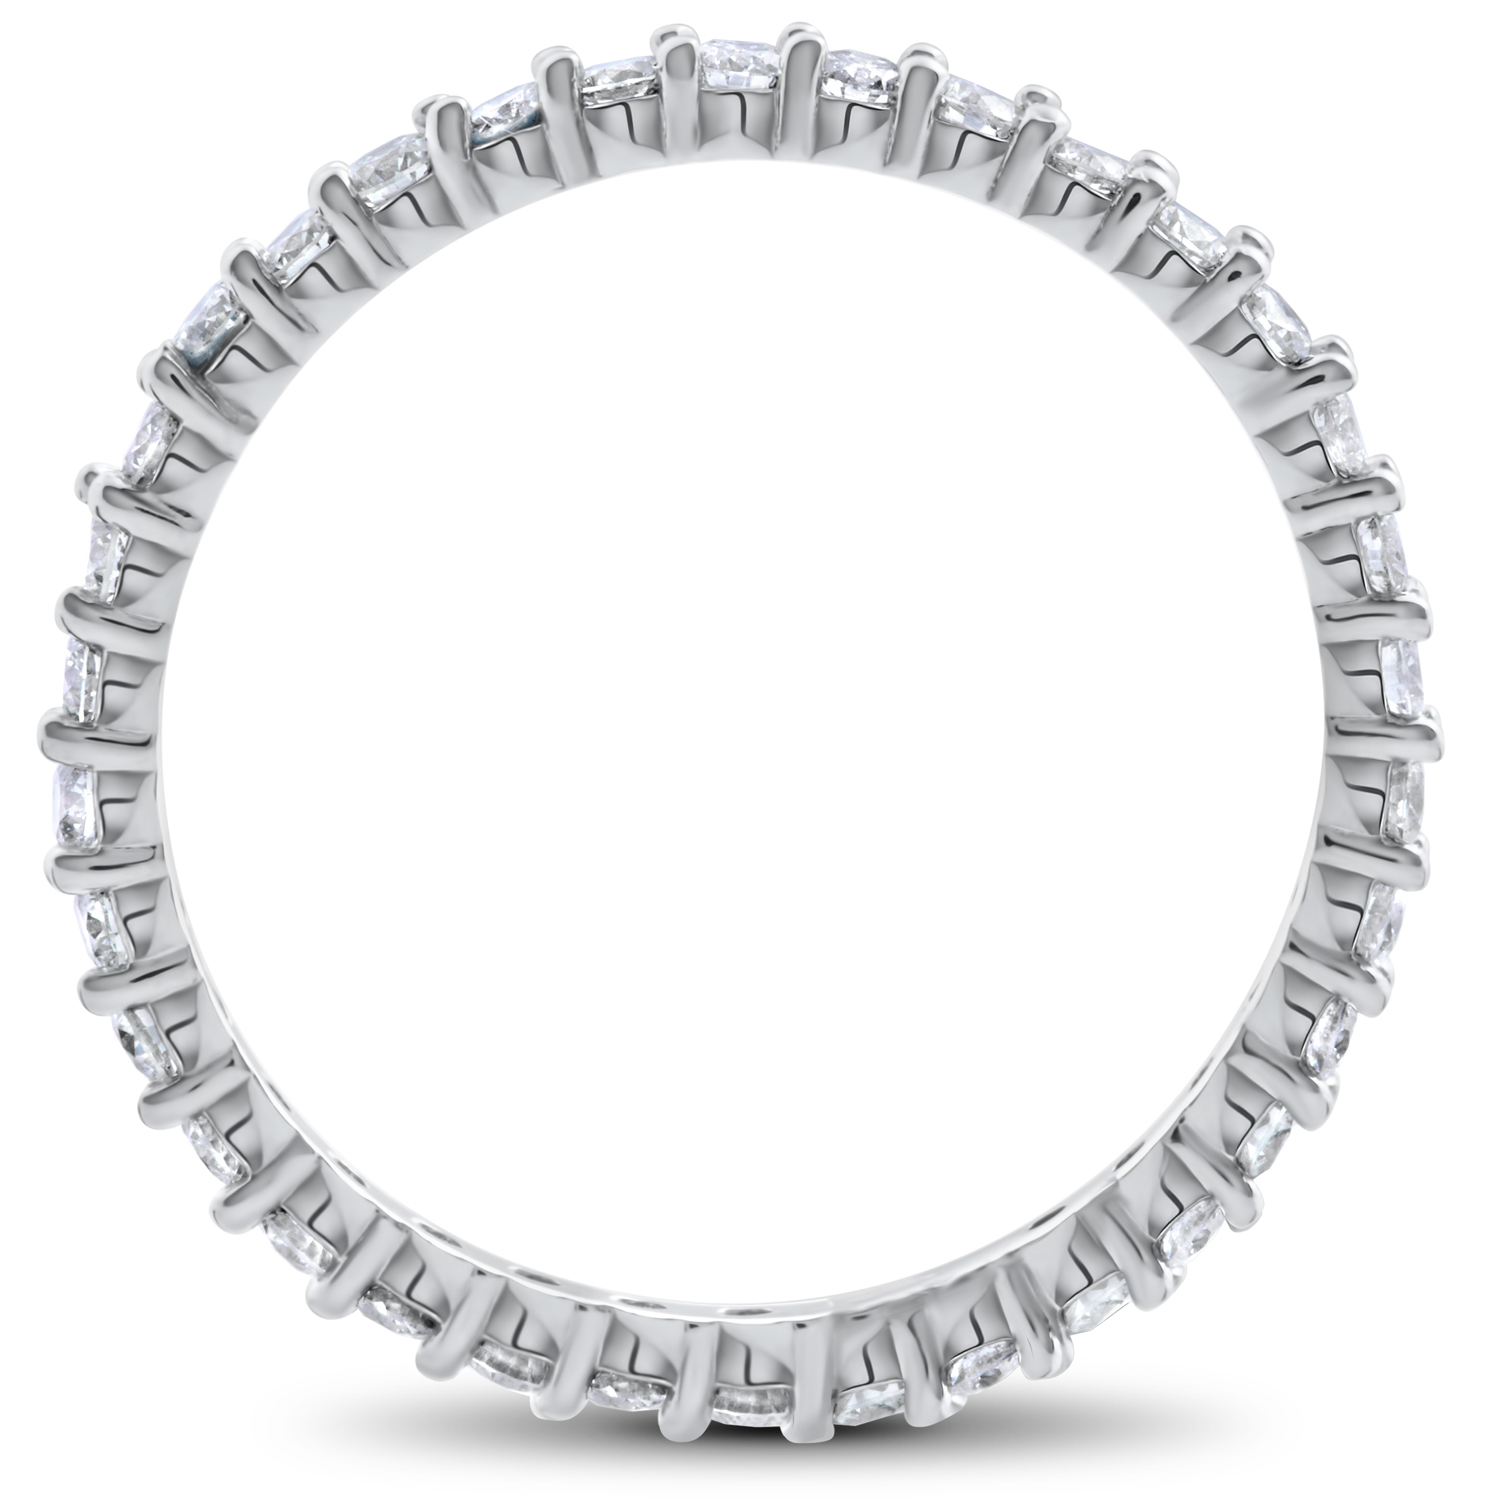 1ct Diamond Eternity Wedding Ring in 14k White, Yellow or Rose Gold | eBay